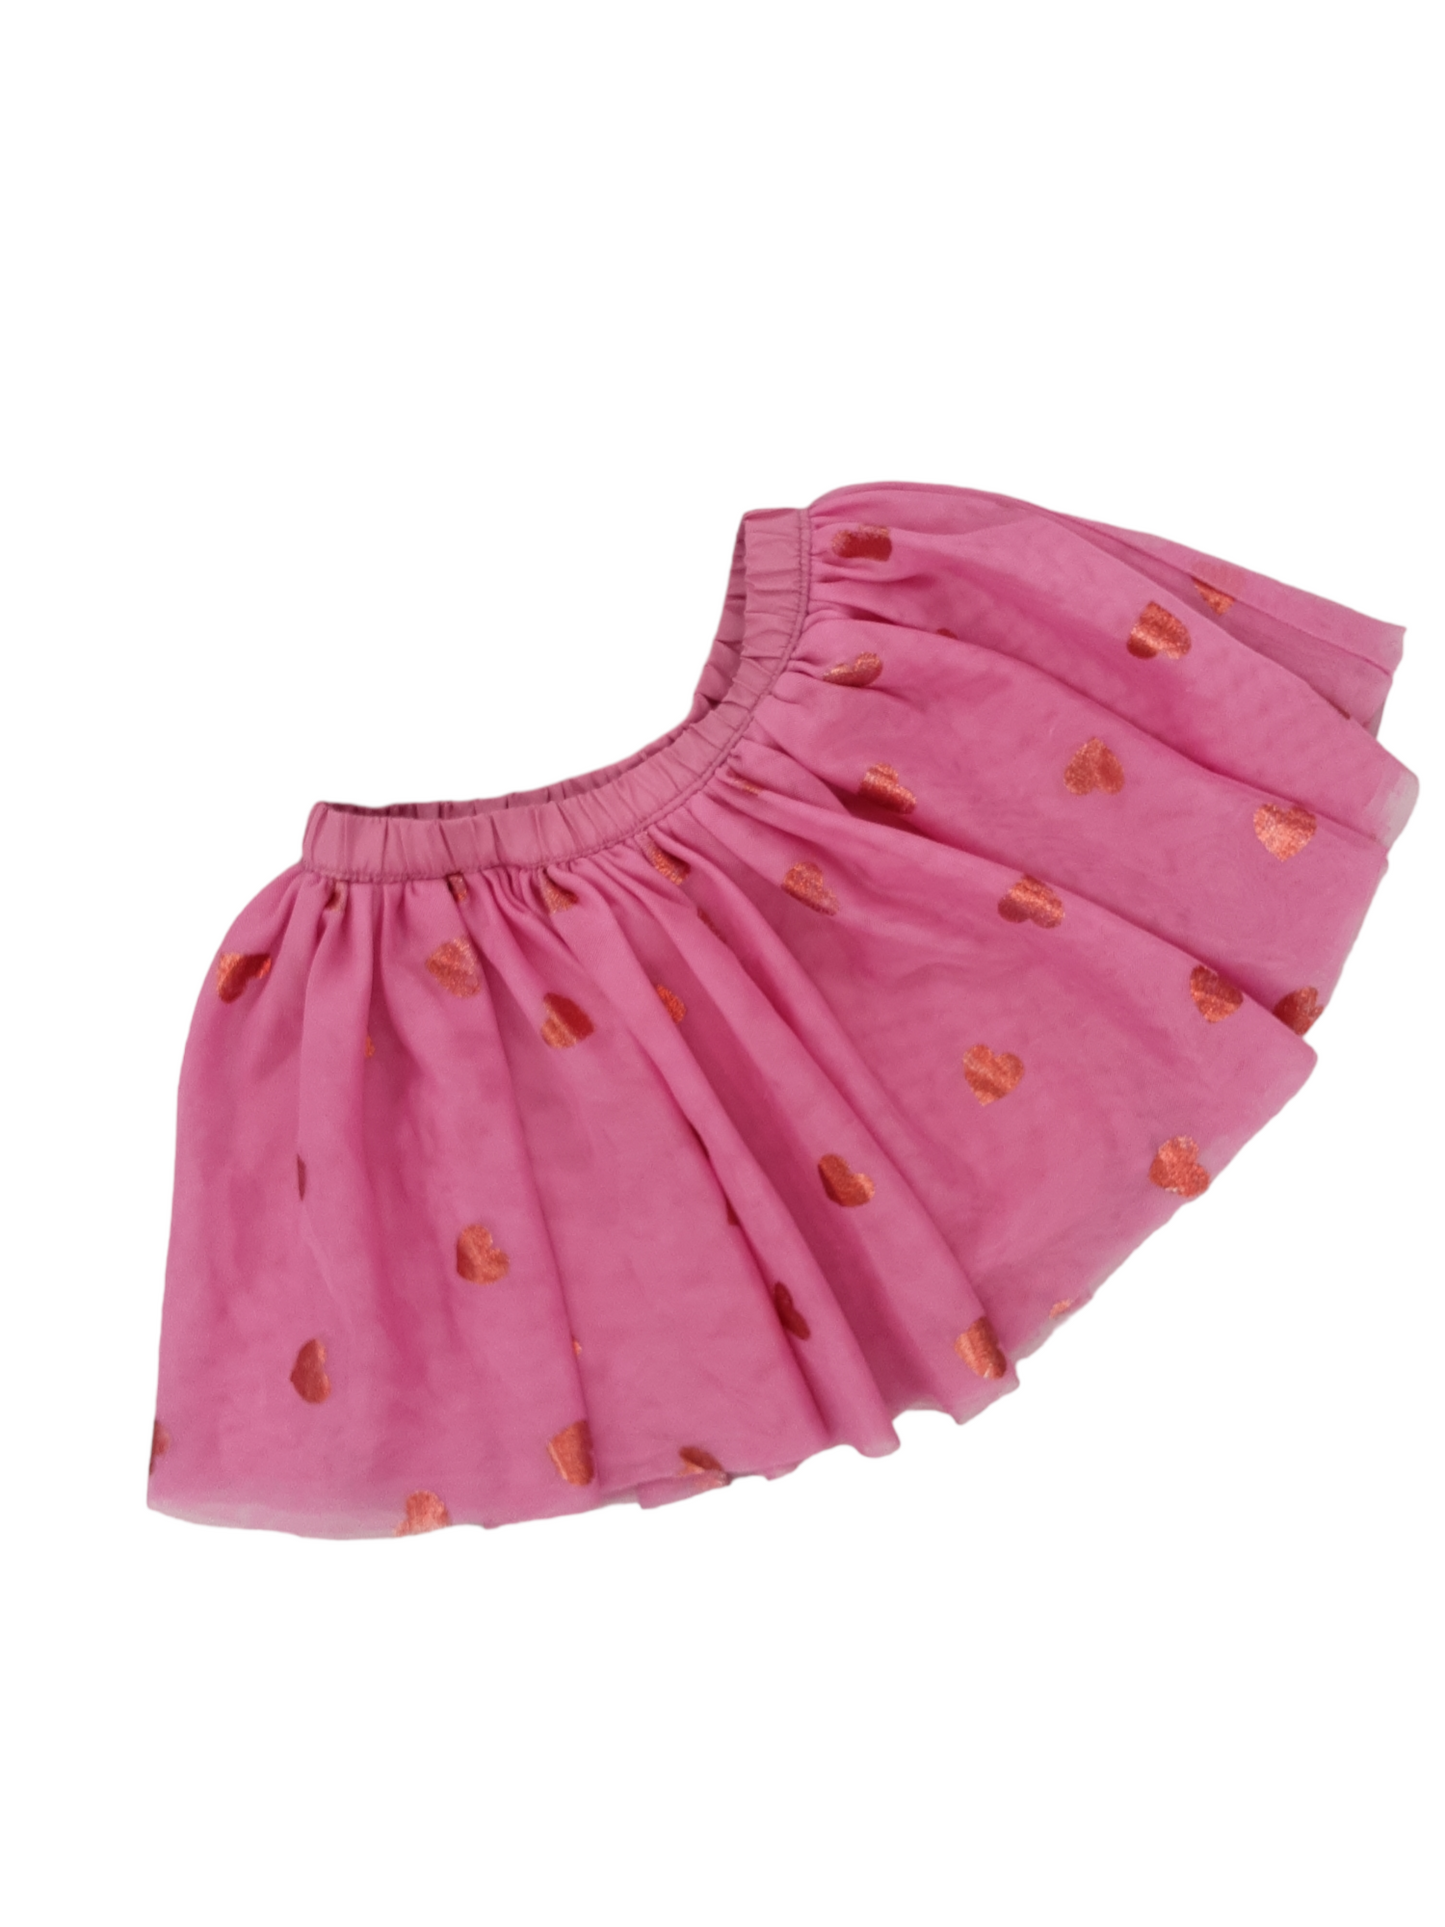 Heart skirt size 3t